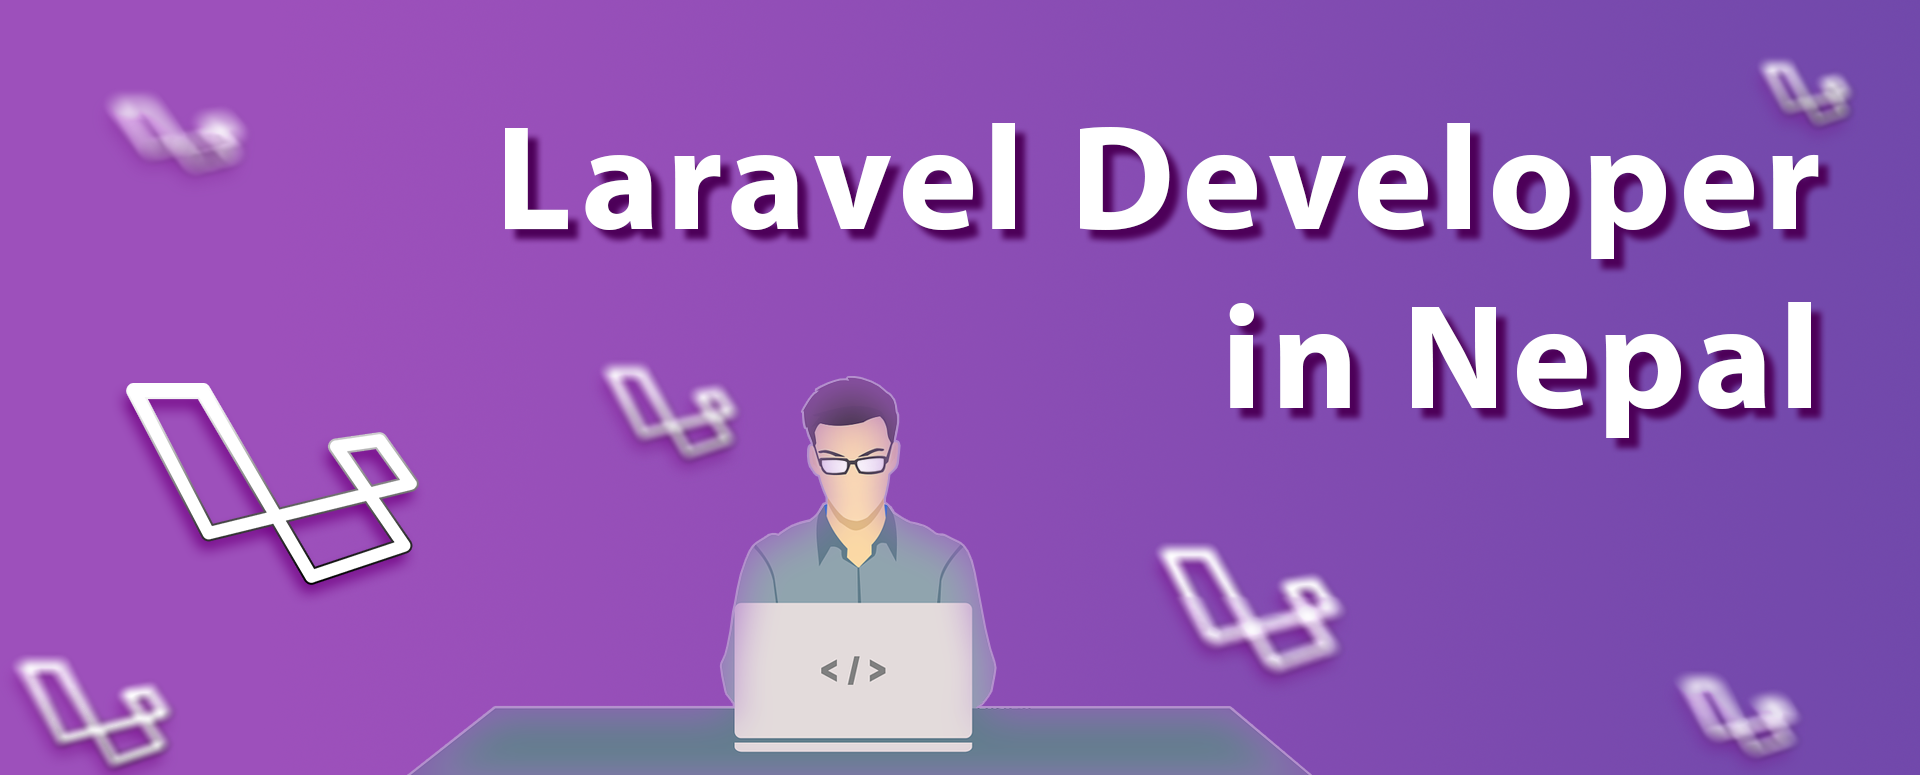 Laravel Developer in Nepal